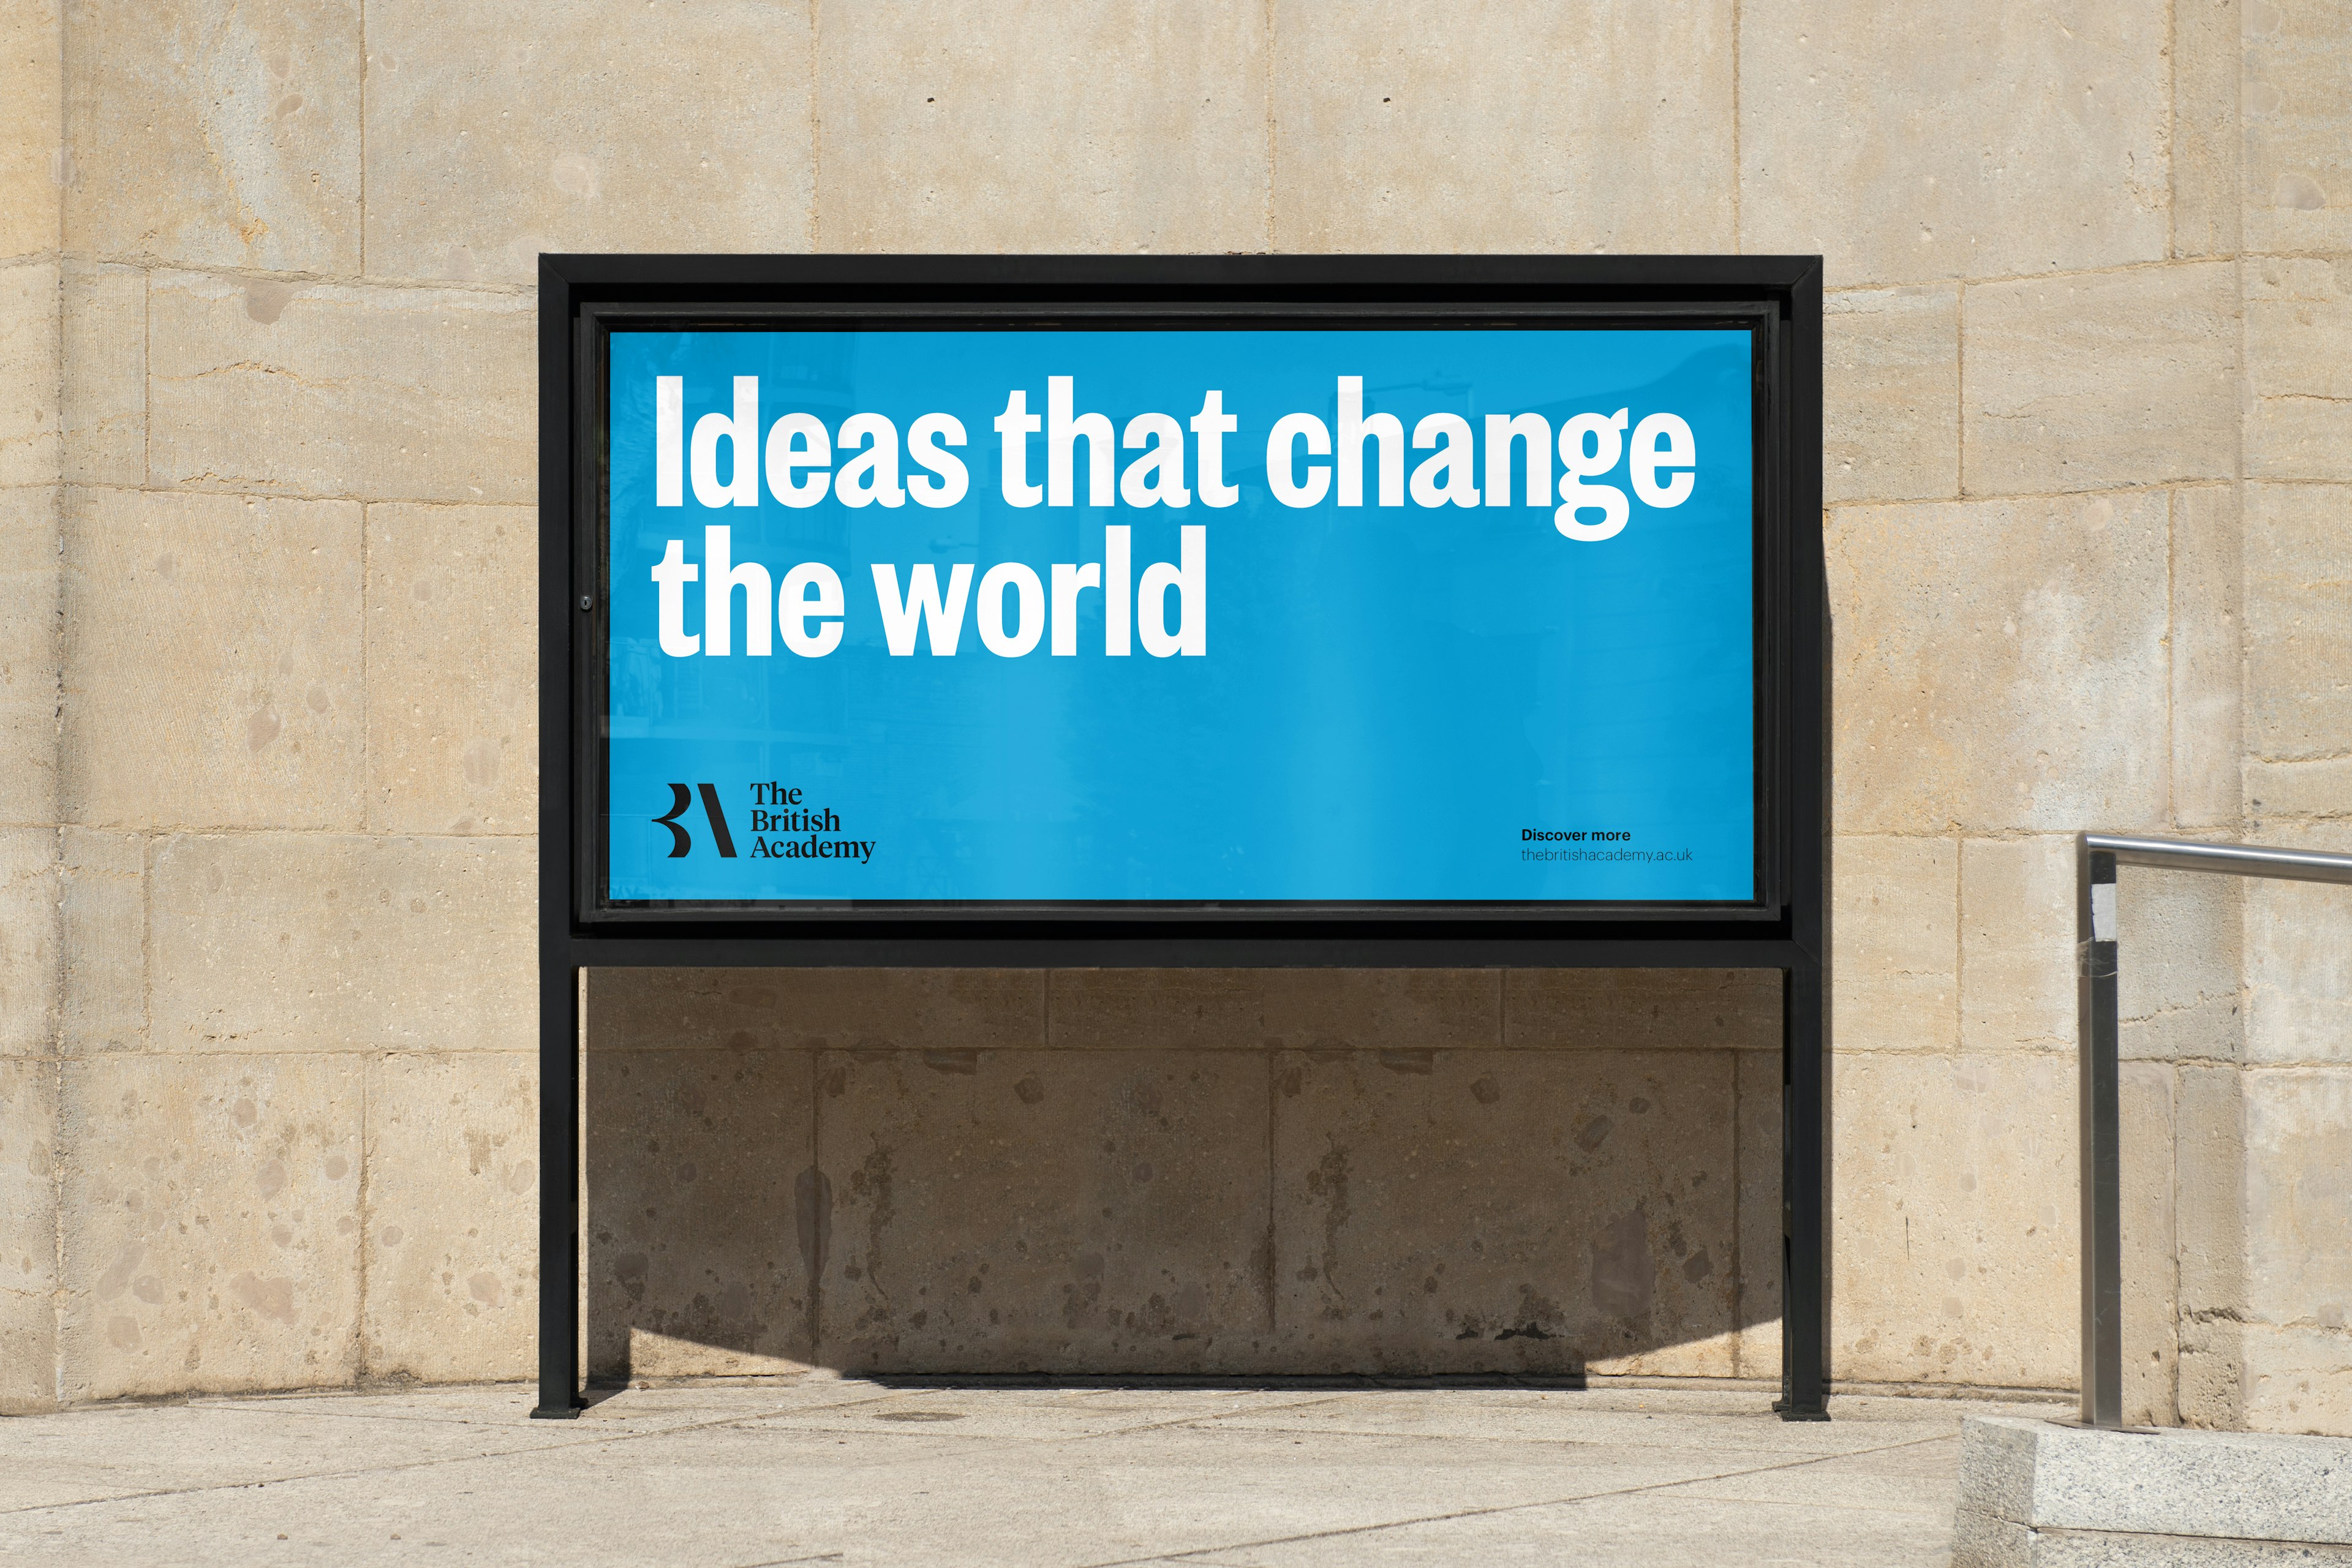 The British Academy brand positioning billboard